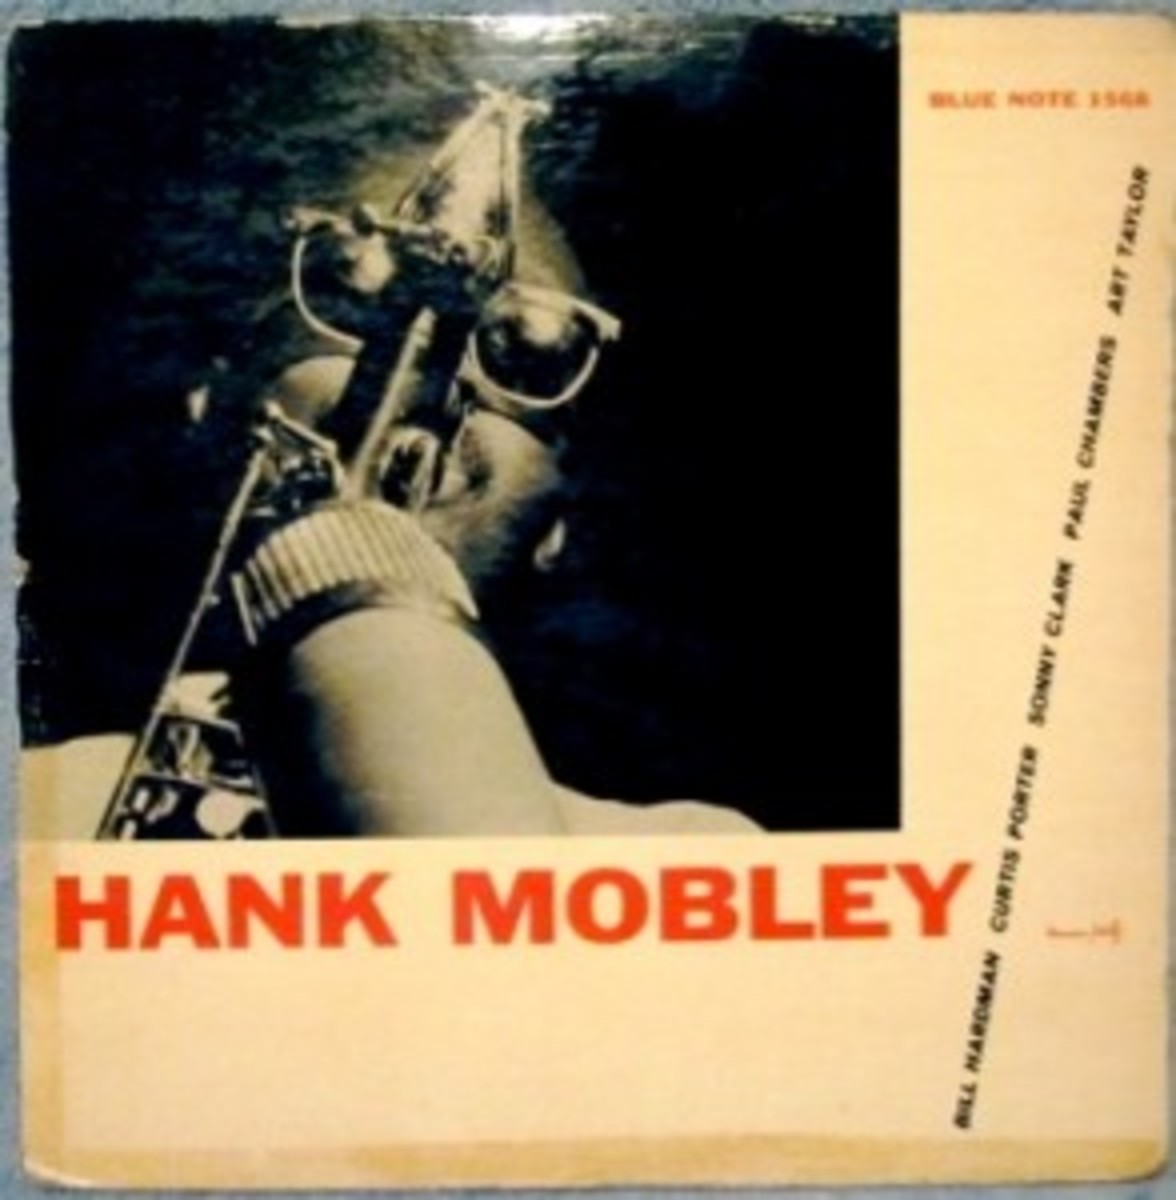 Hank Mobley's "Hank Mobley"